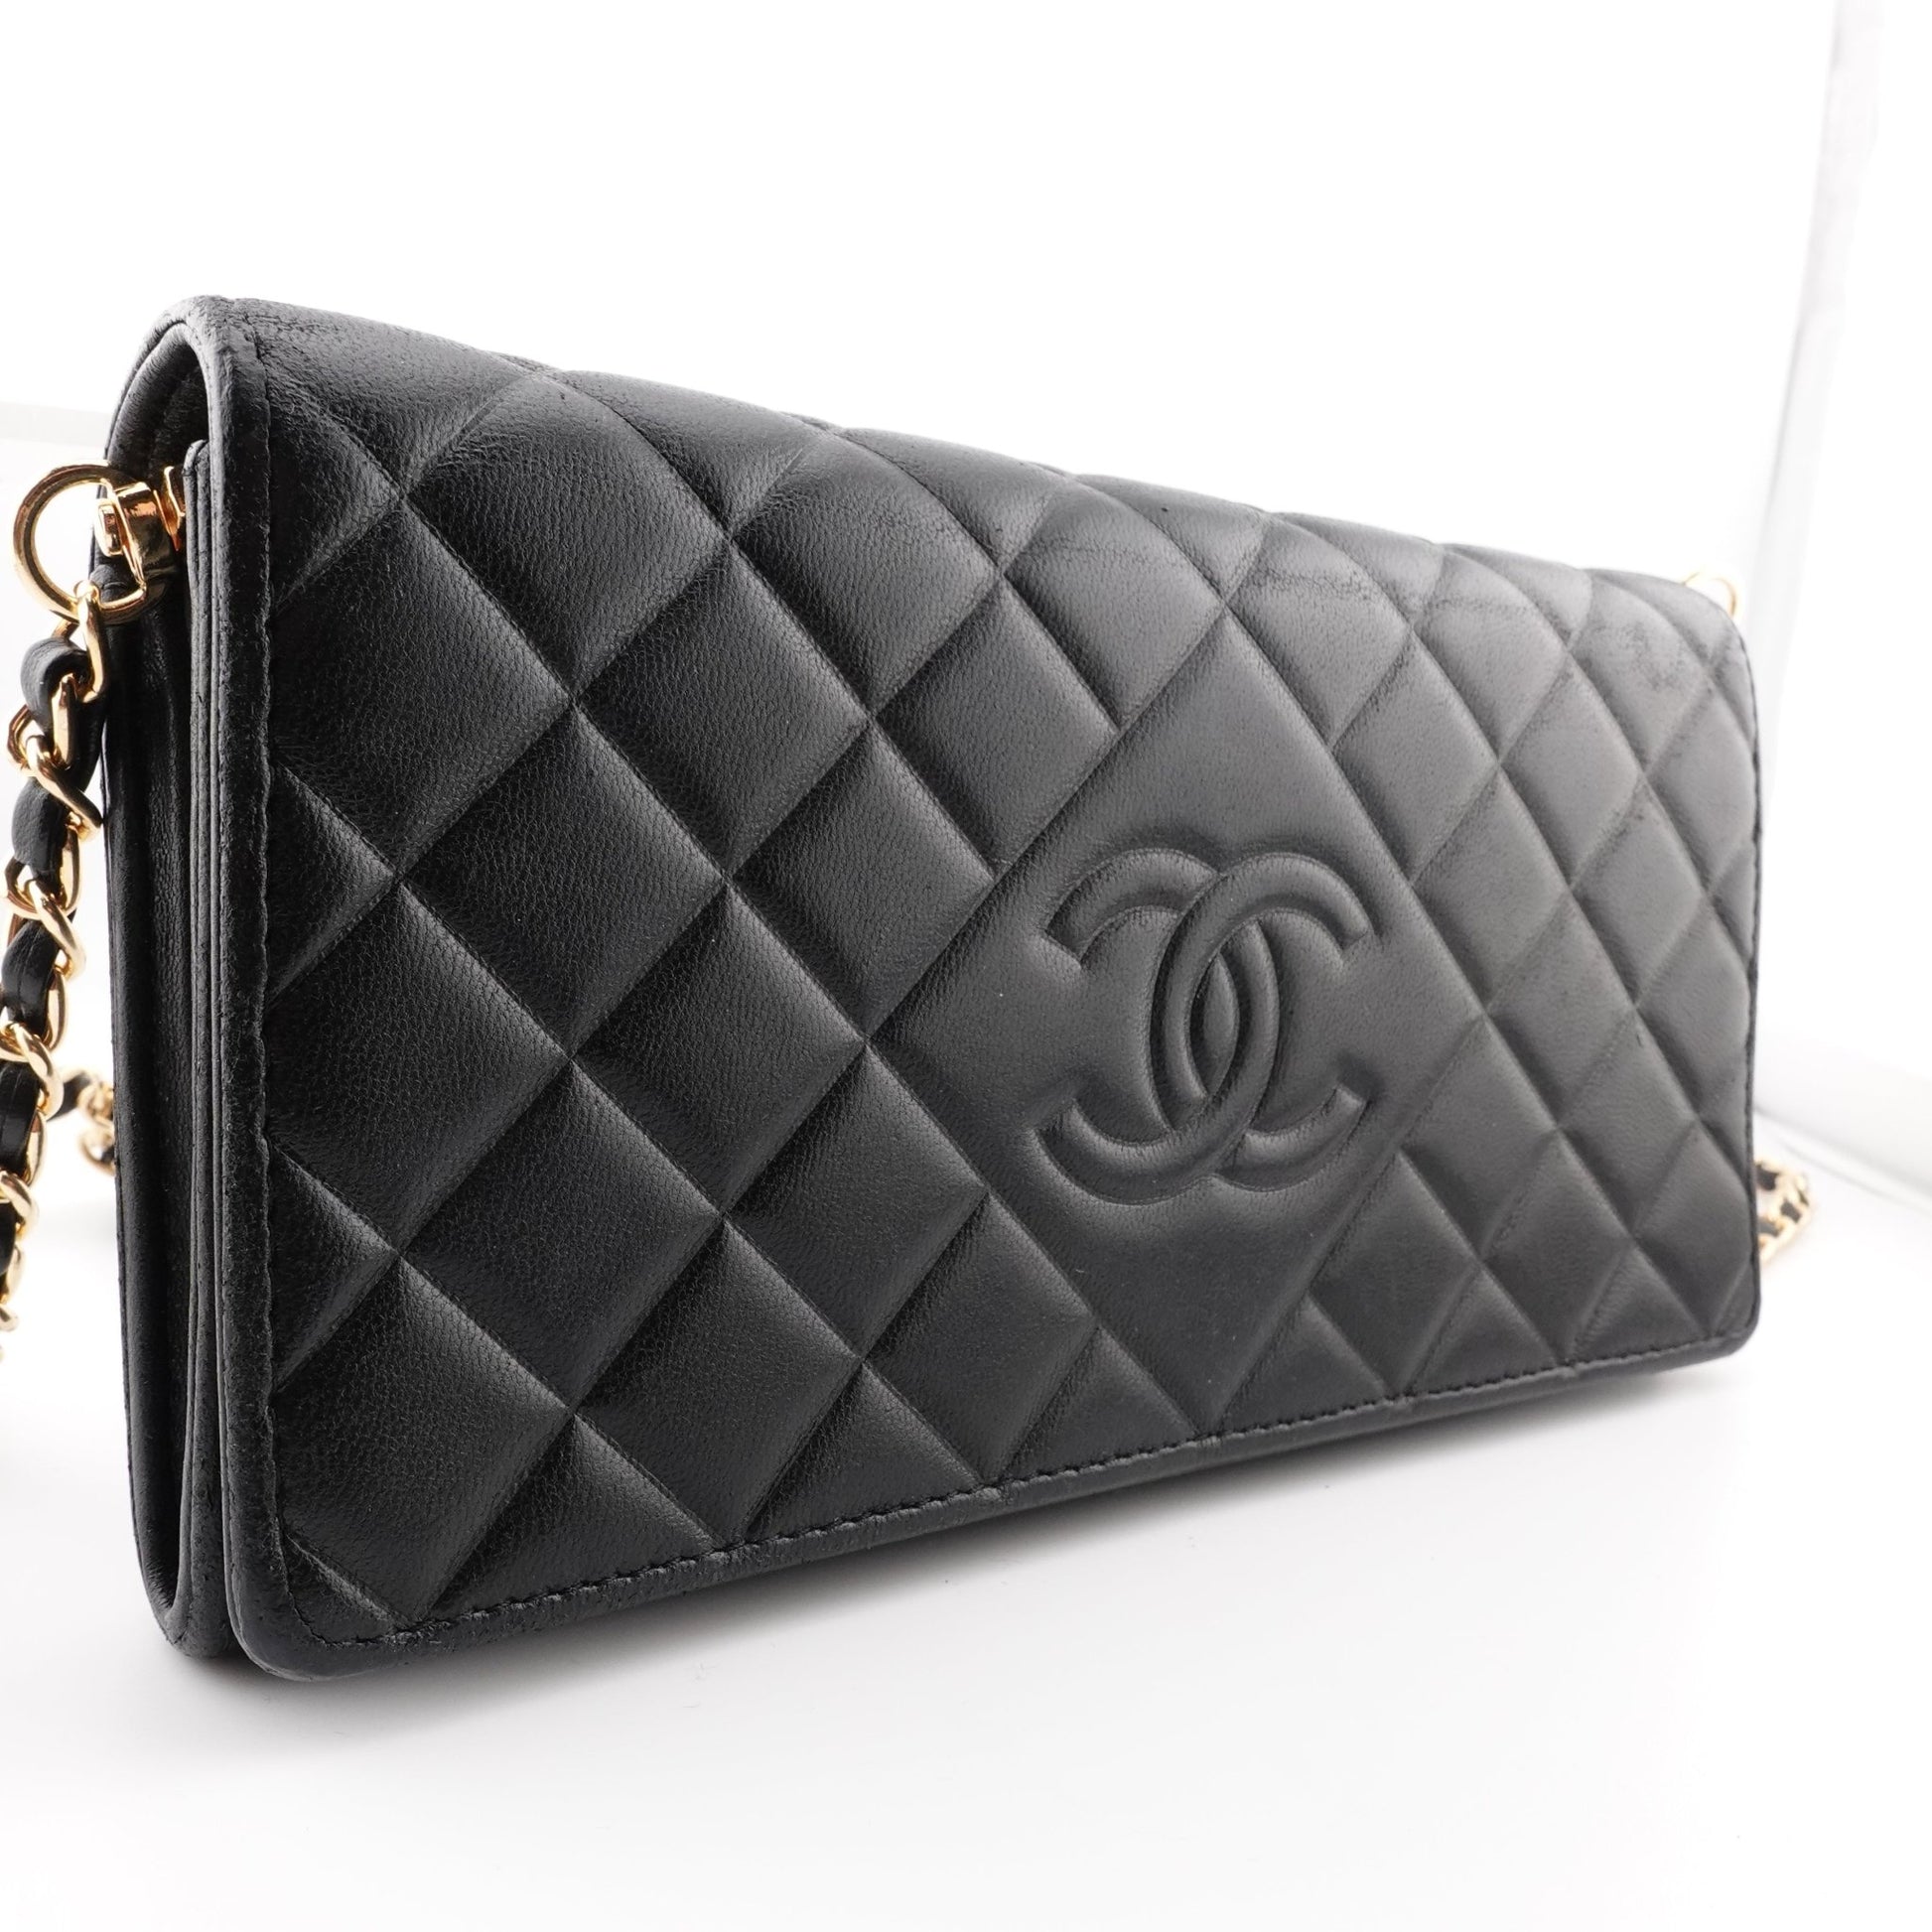 CHANEL Lambskin CC in Diamond Full Flap Wallet on Adjustable Chain - Bag Envy